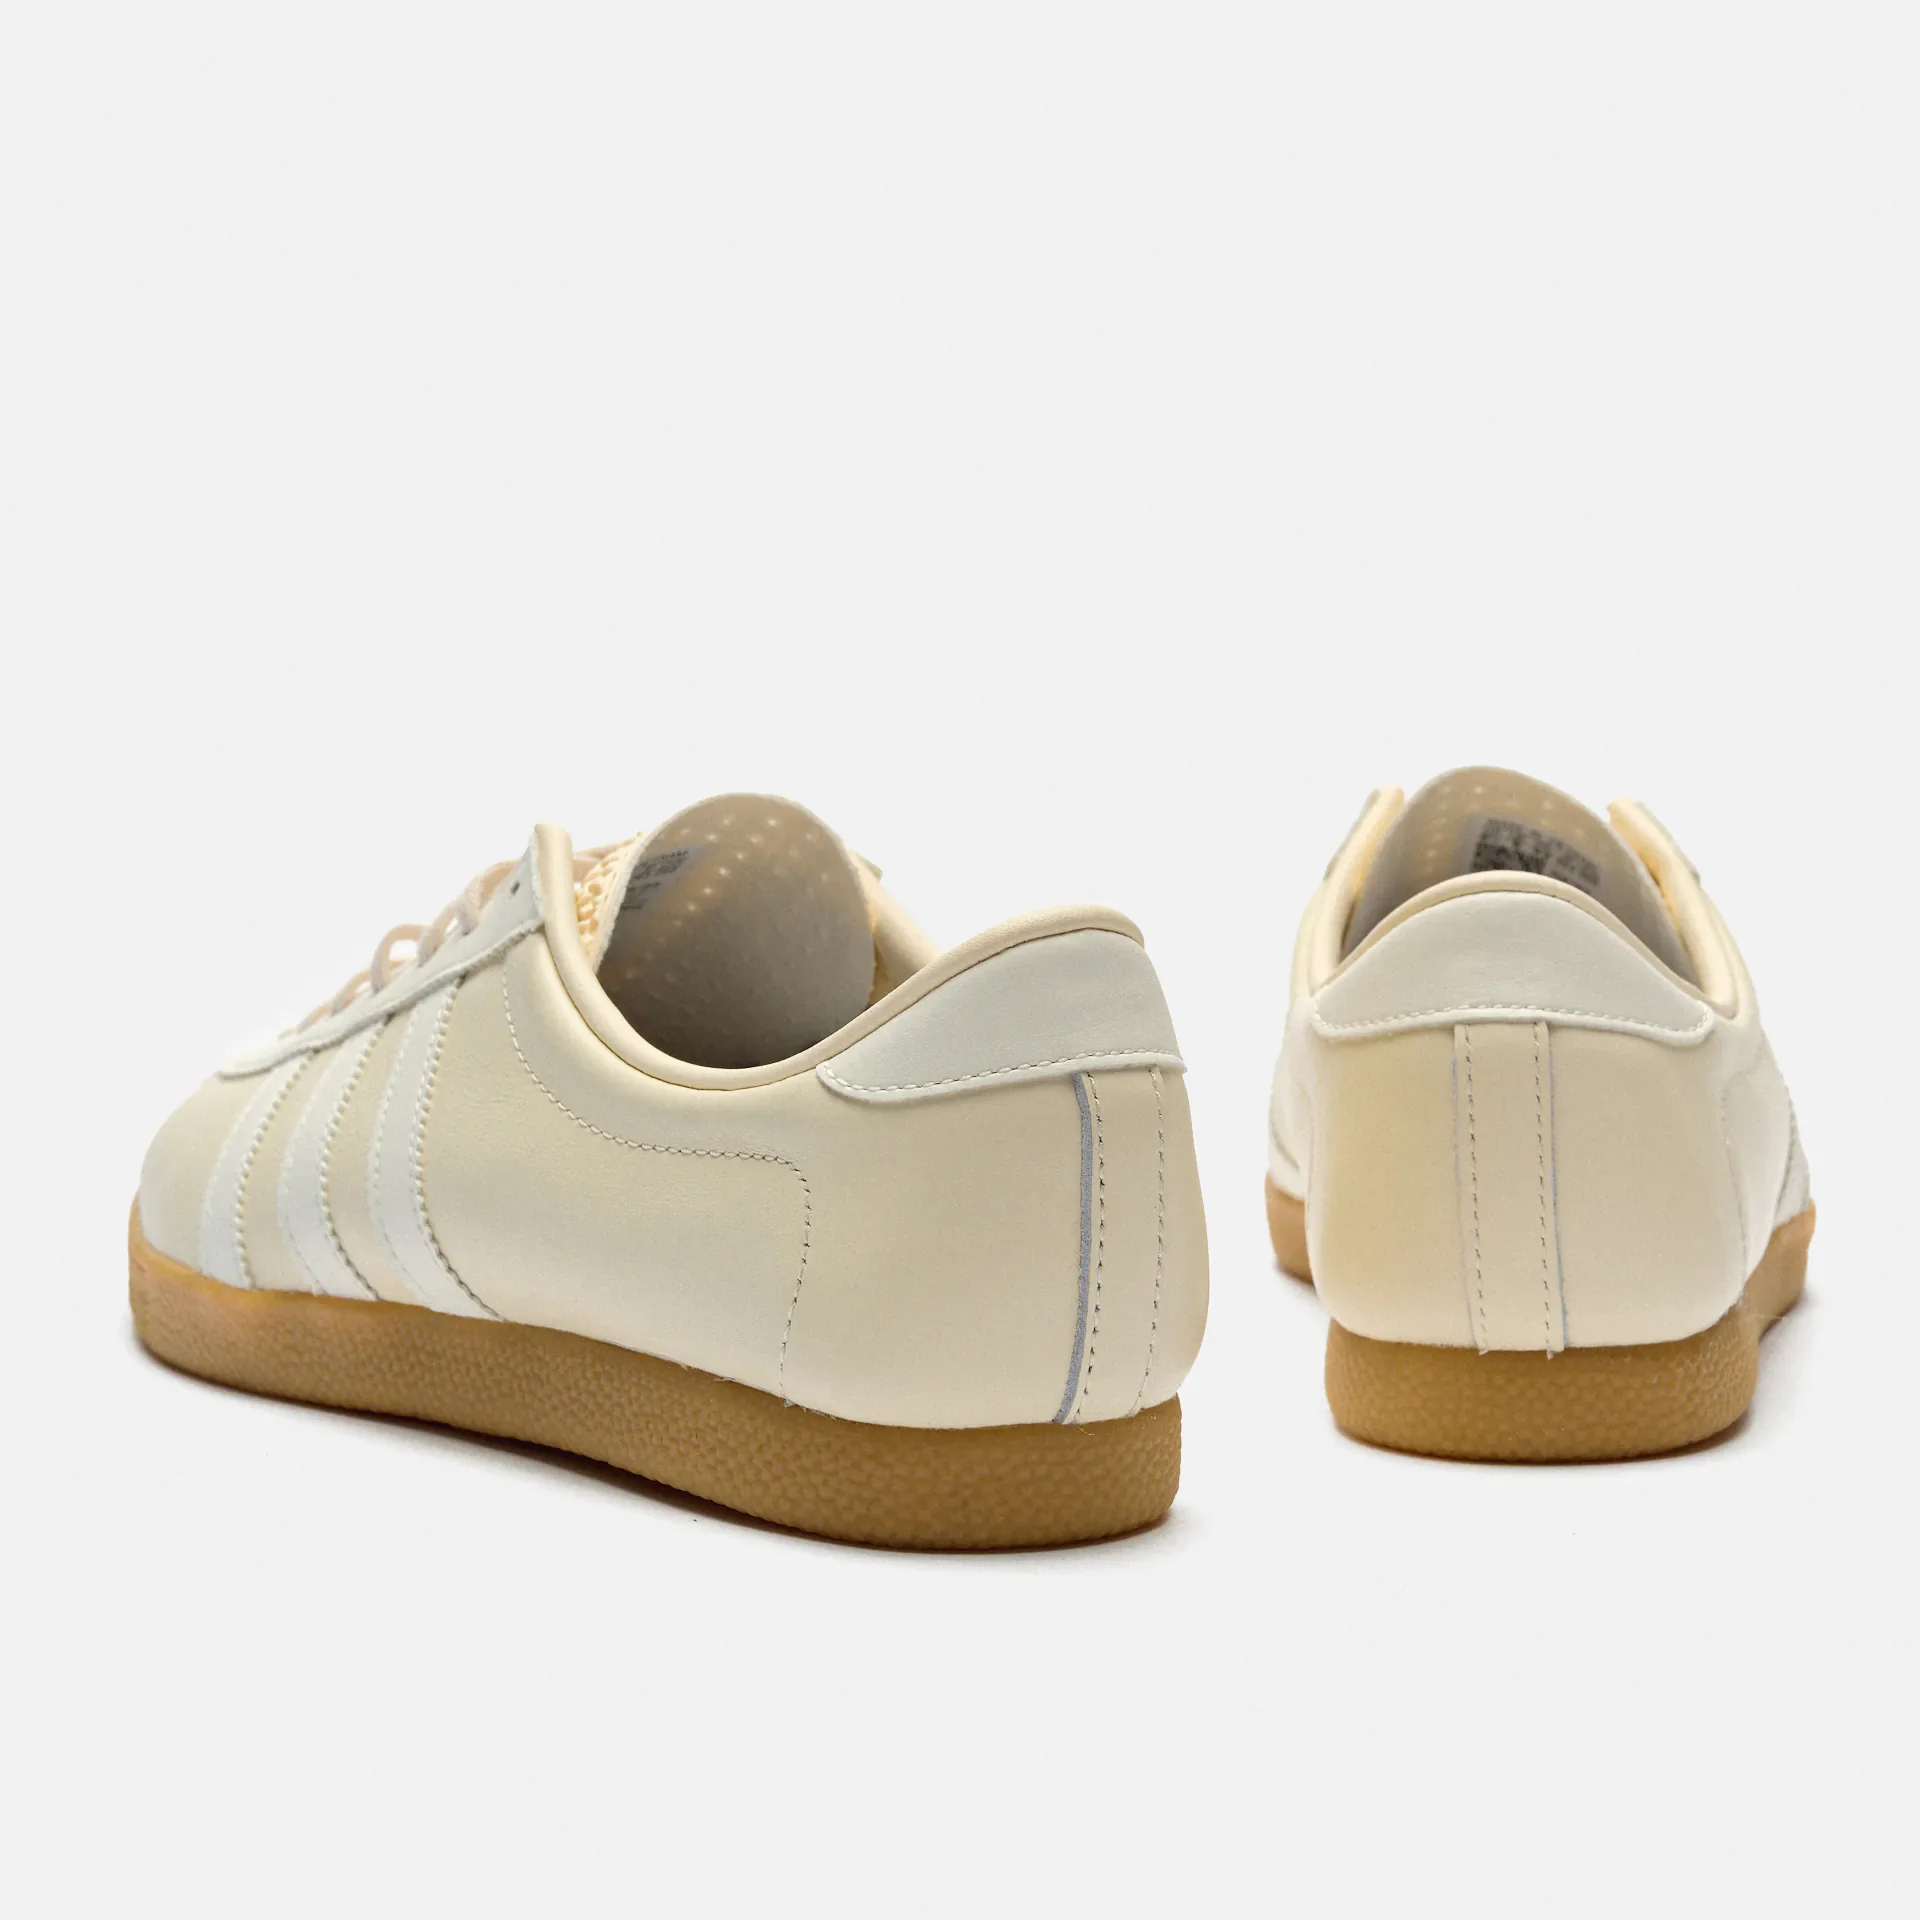 adidas Originals London Sneaker Wonder White/Core White/Gum 3